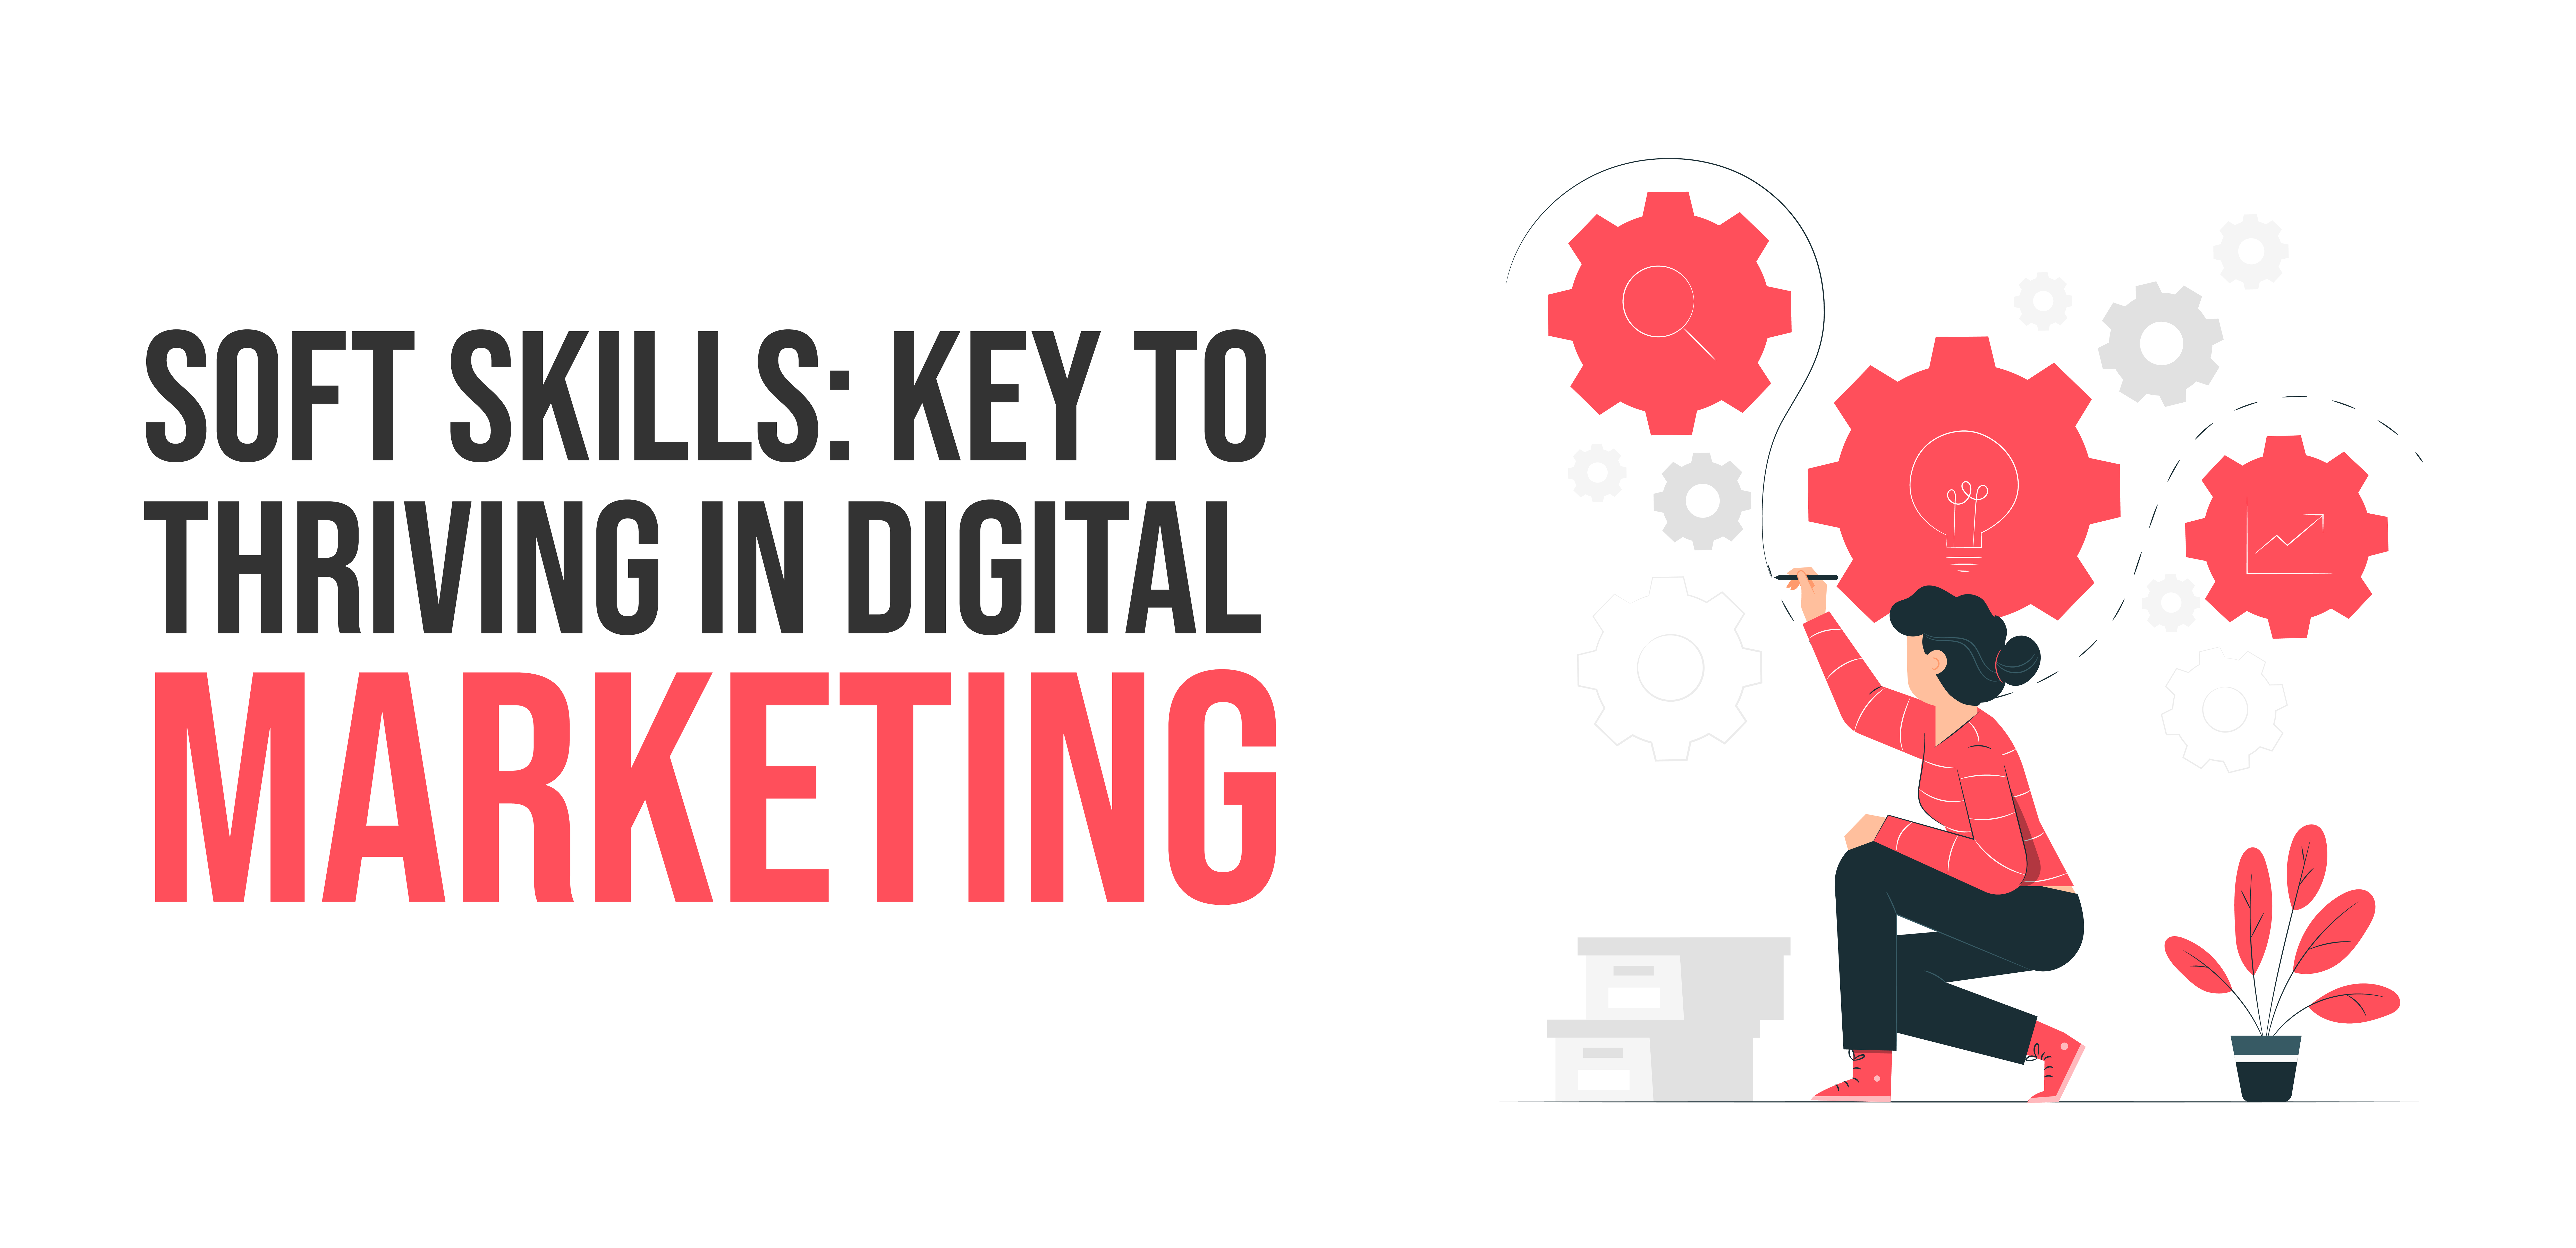 Soft Skills - Key to Thriving in Digital Marketing